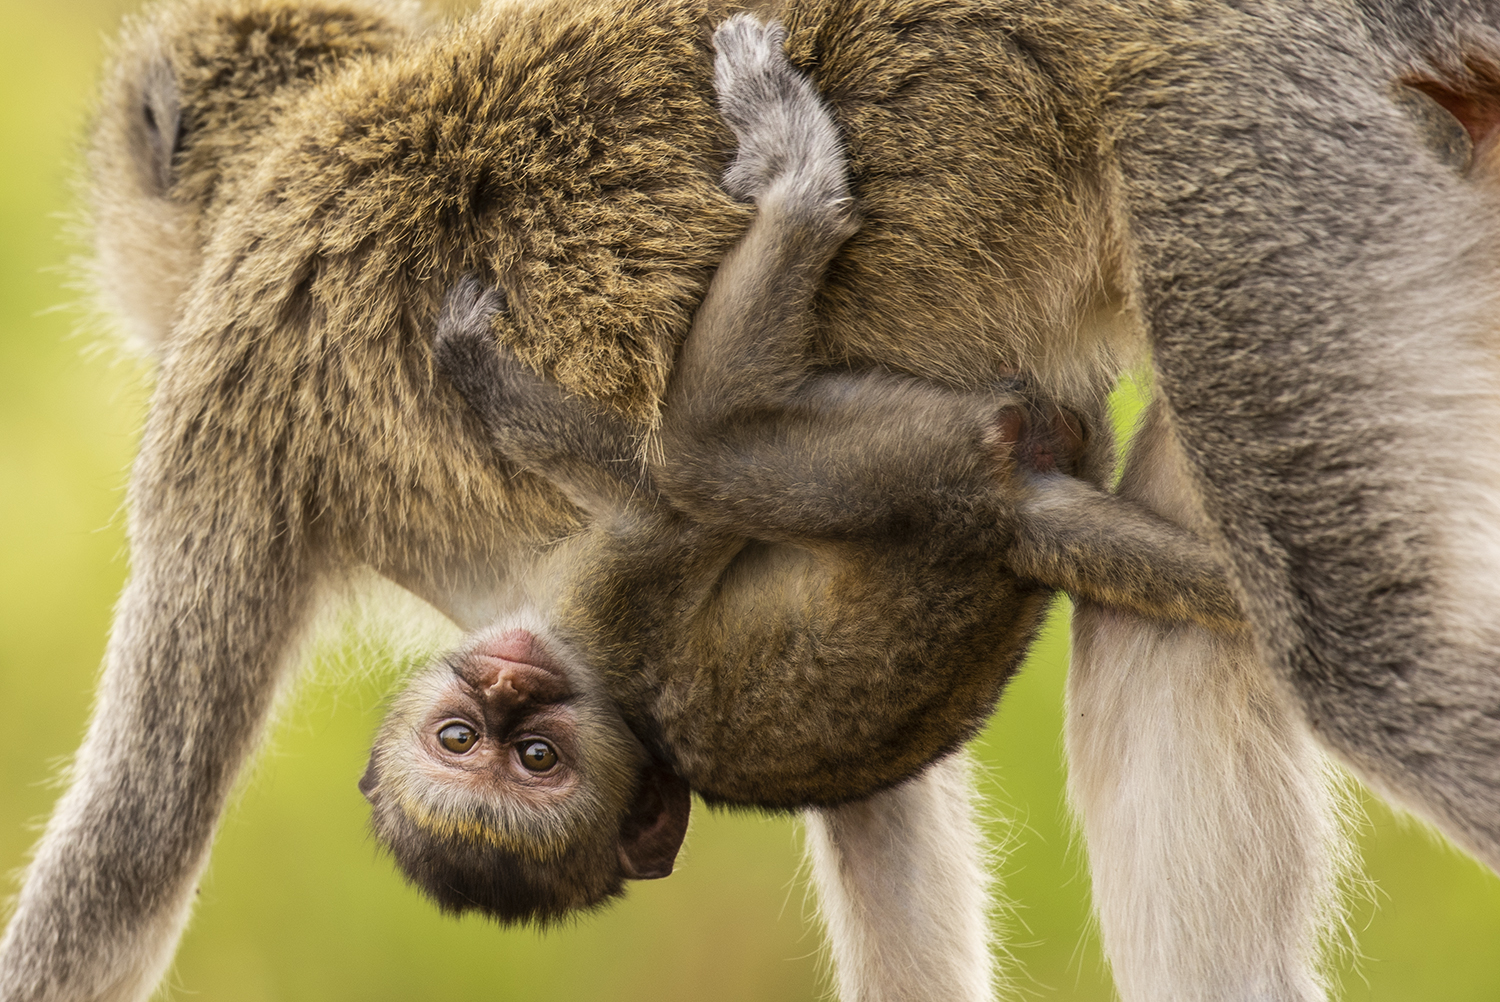 Baby monkey hanging on mom